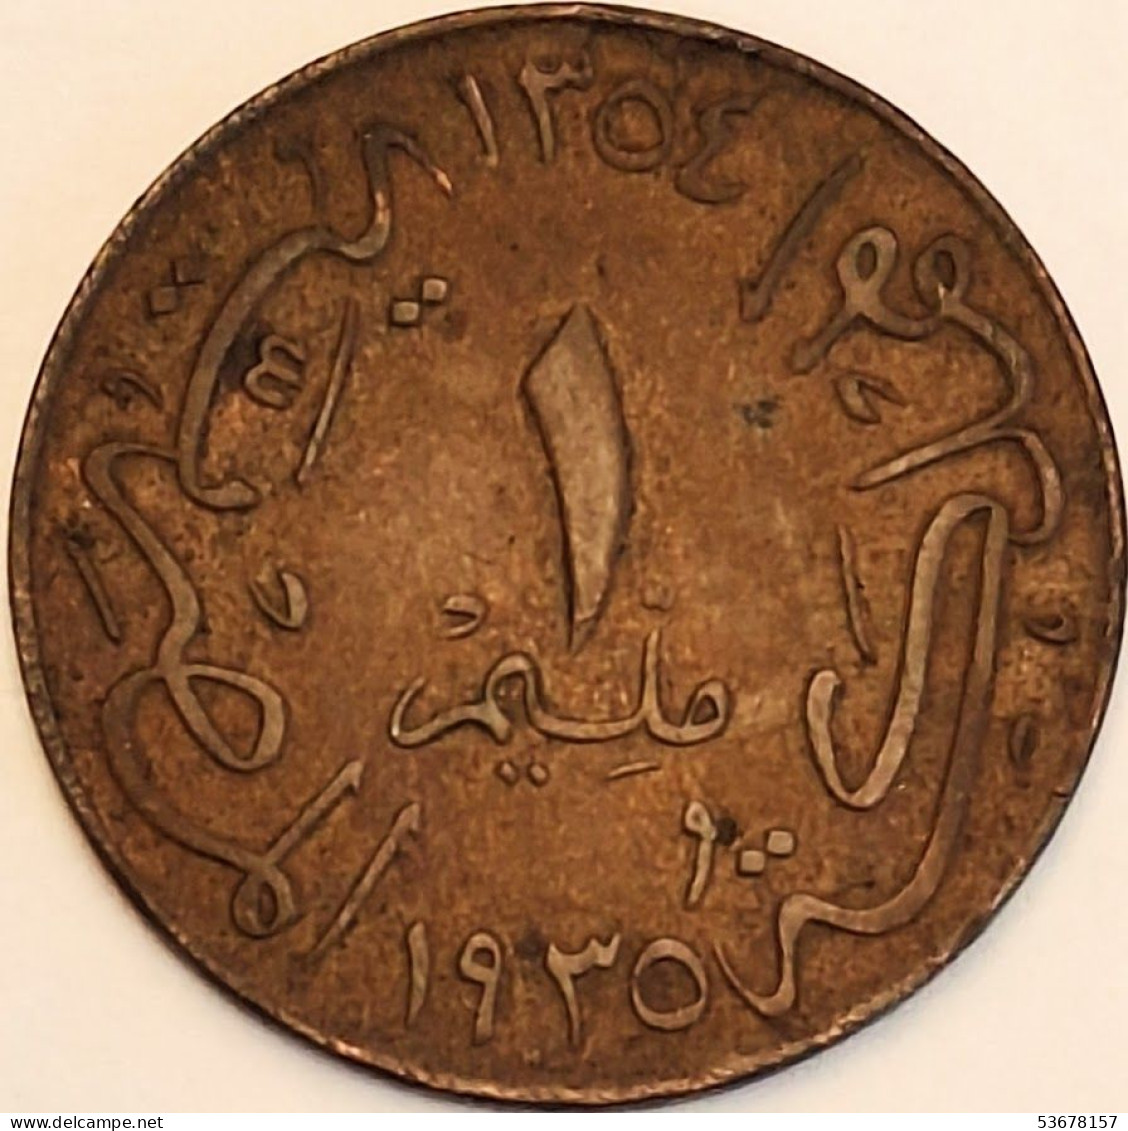 Egypt - Millieme AH1354-1935H, KM# 344 (#3832) - Egypte